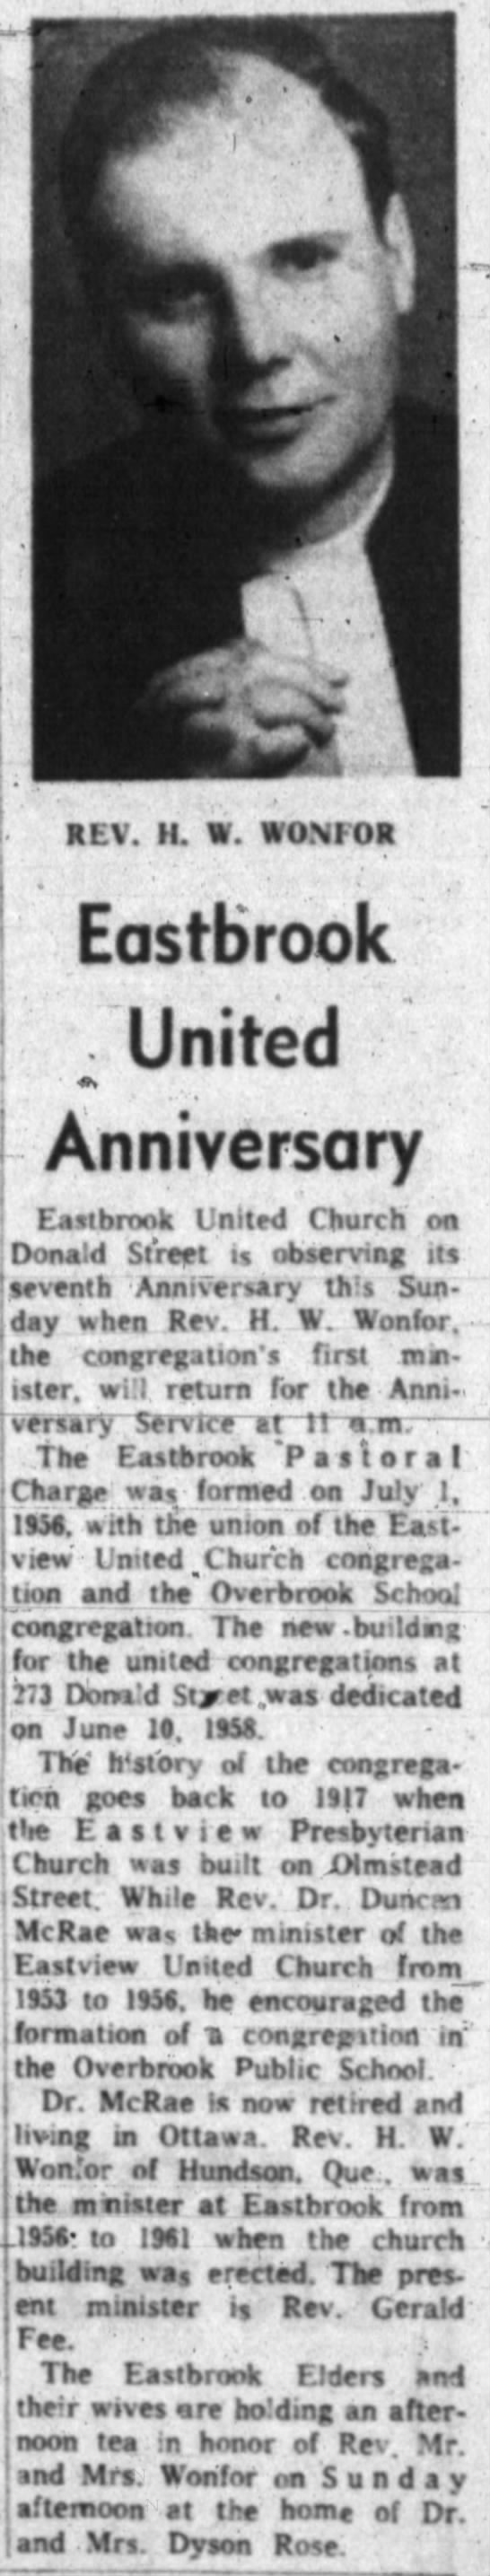 Eastbrook United Church history - 